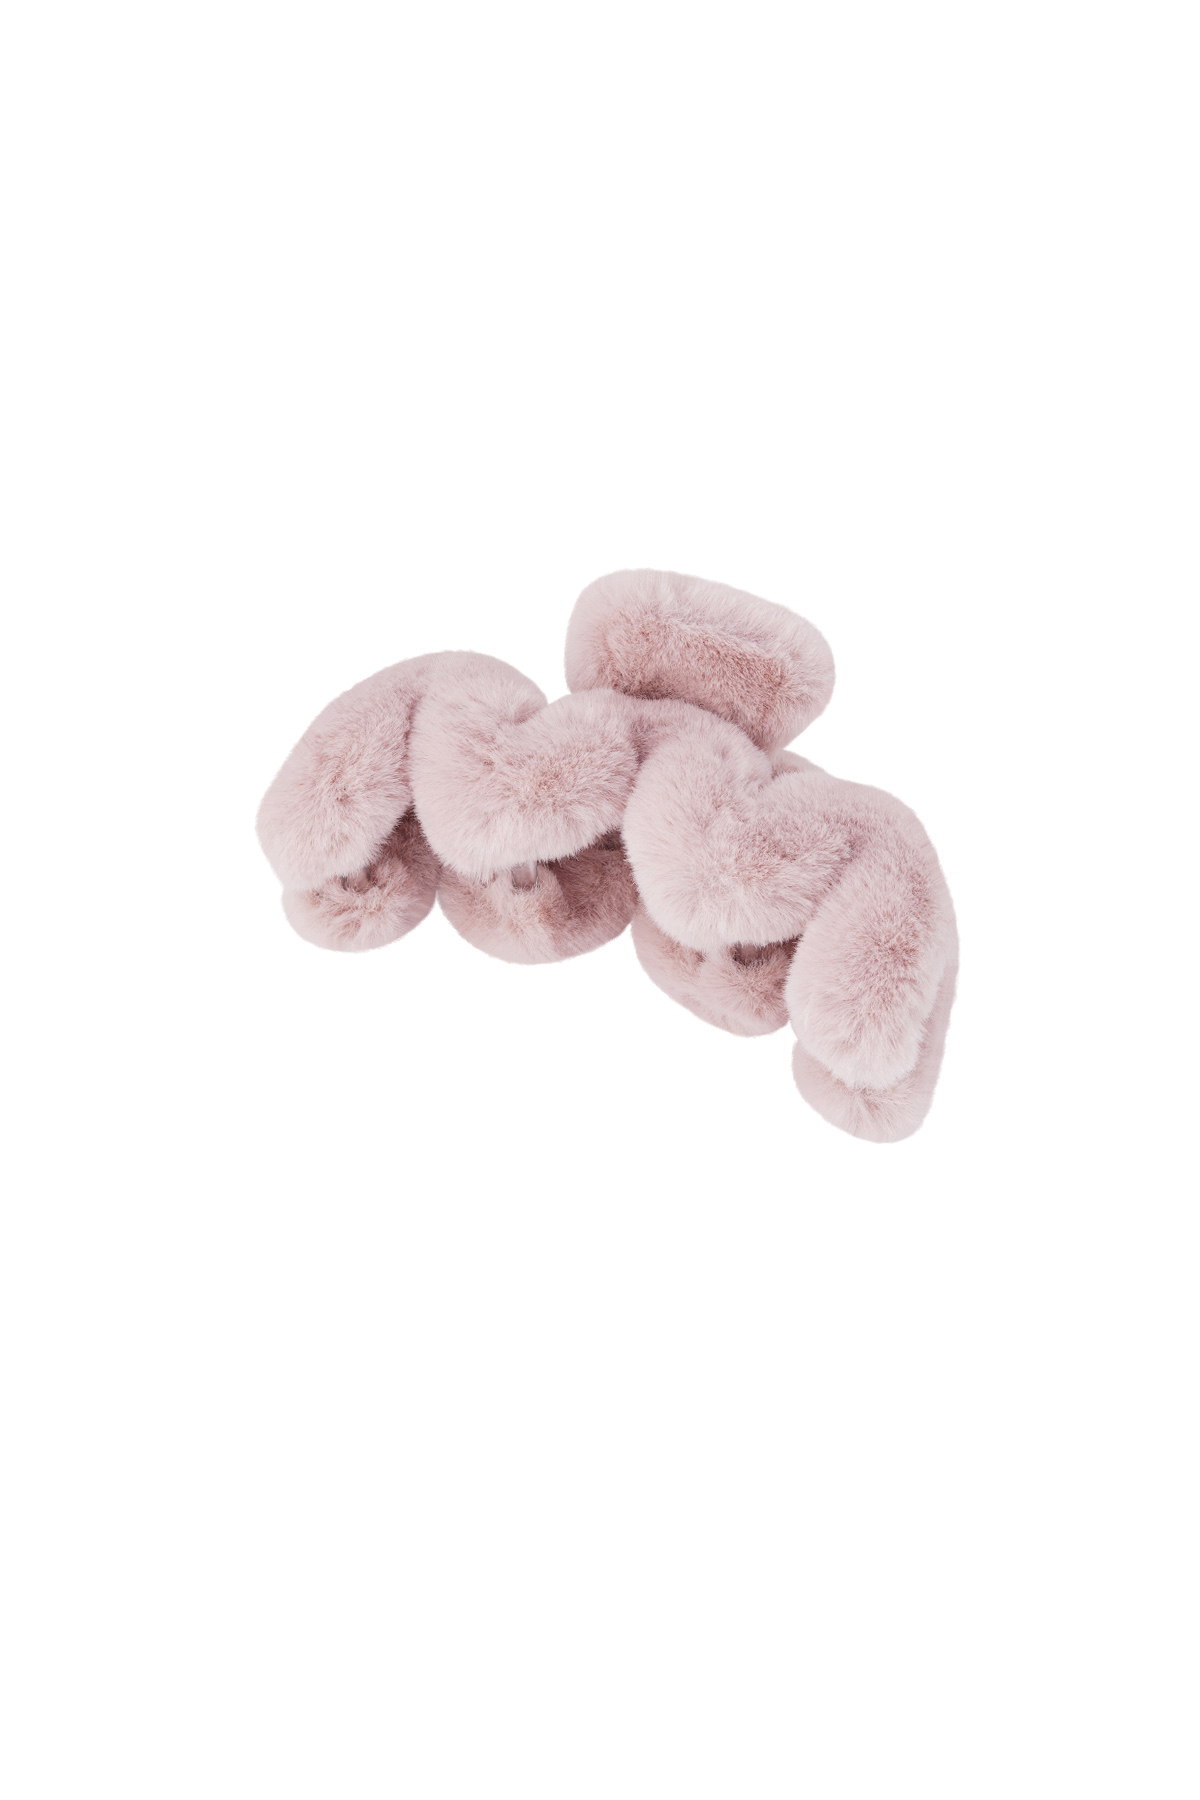 Haarspange flauschiger Zickzack - rosa